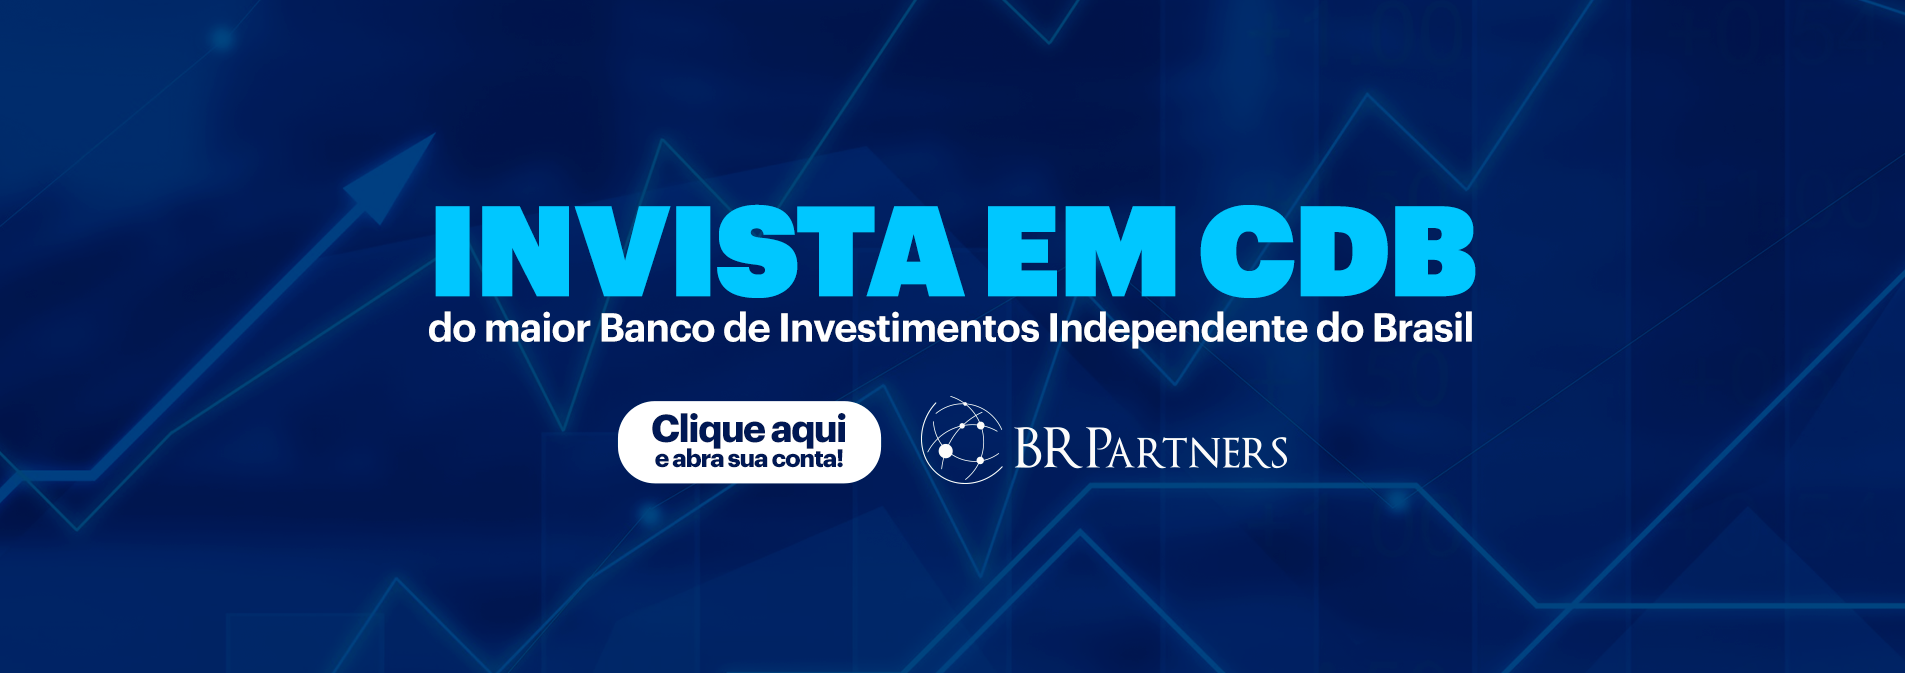 BR-Partners_Banner_Invista-em-CDB (1)